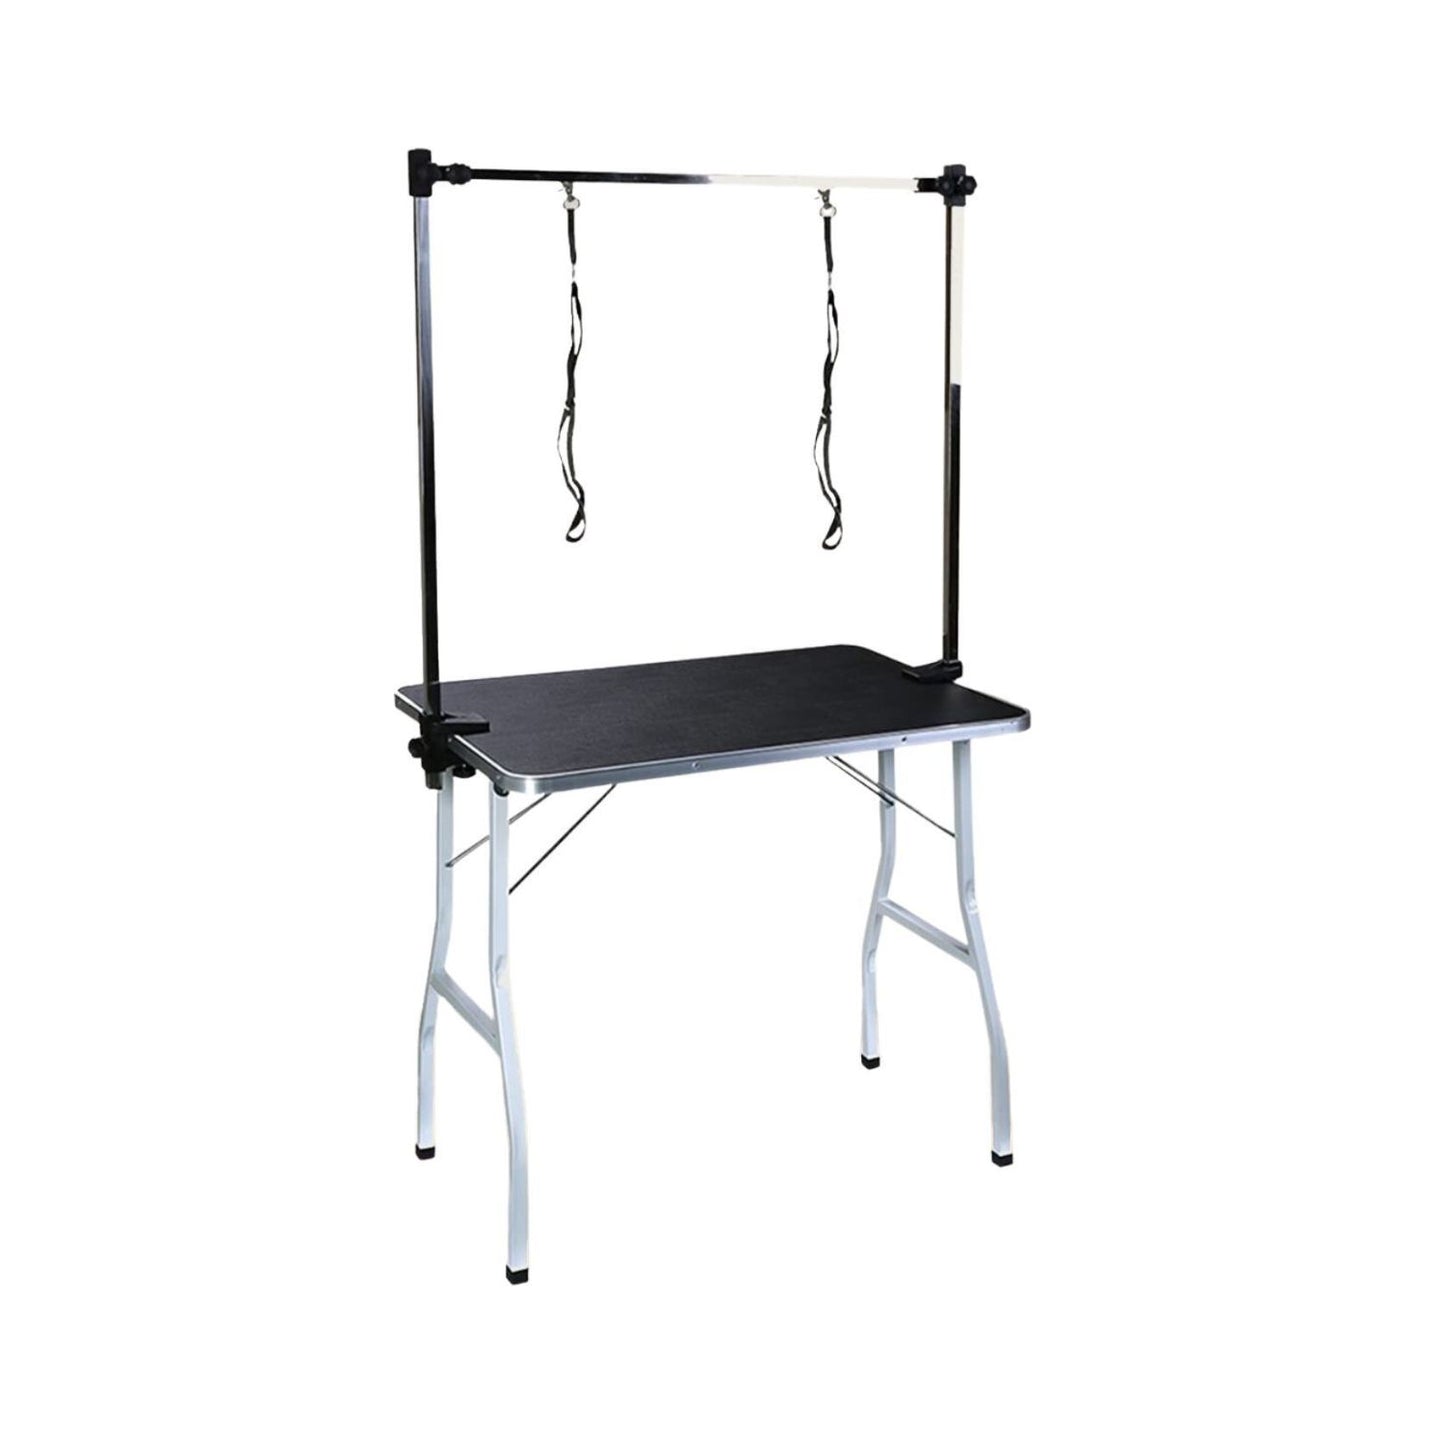 Floofi Pet Grooming Table 90cm Double Pole (Black) FI-GT-102-LZ